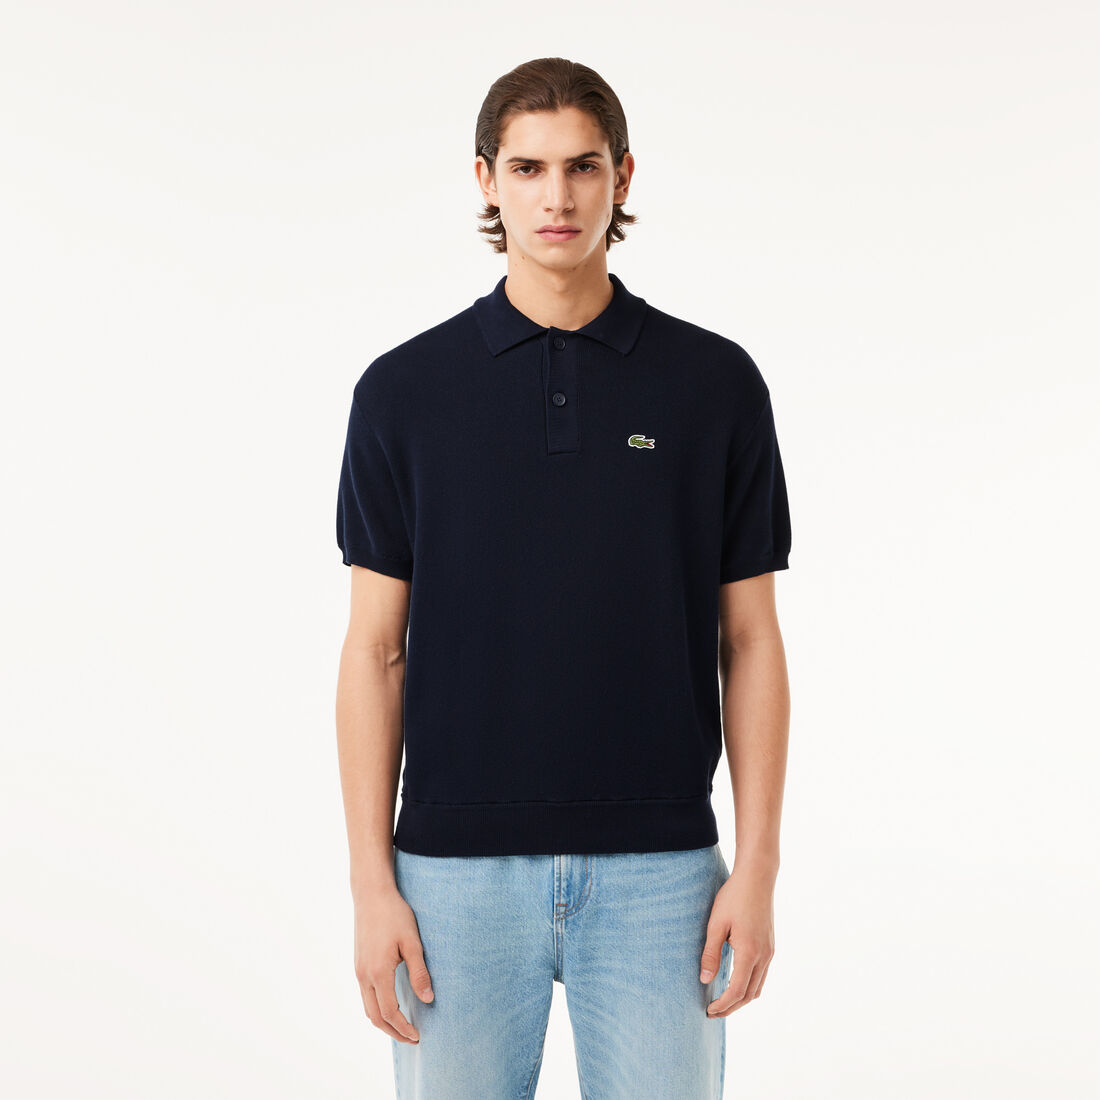 Organic Cotton Polo Shirt Neck Sweater - AH7642-00-423